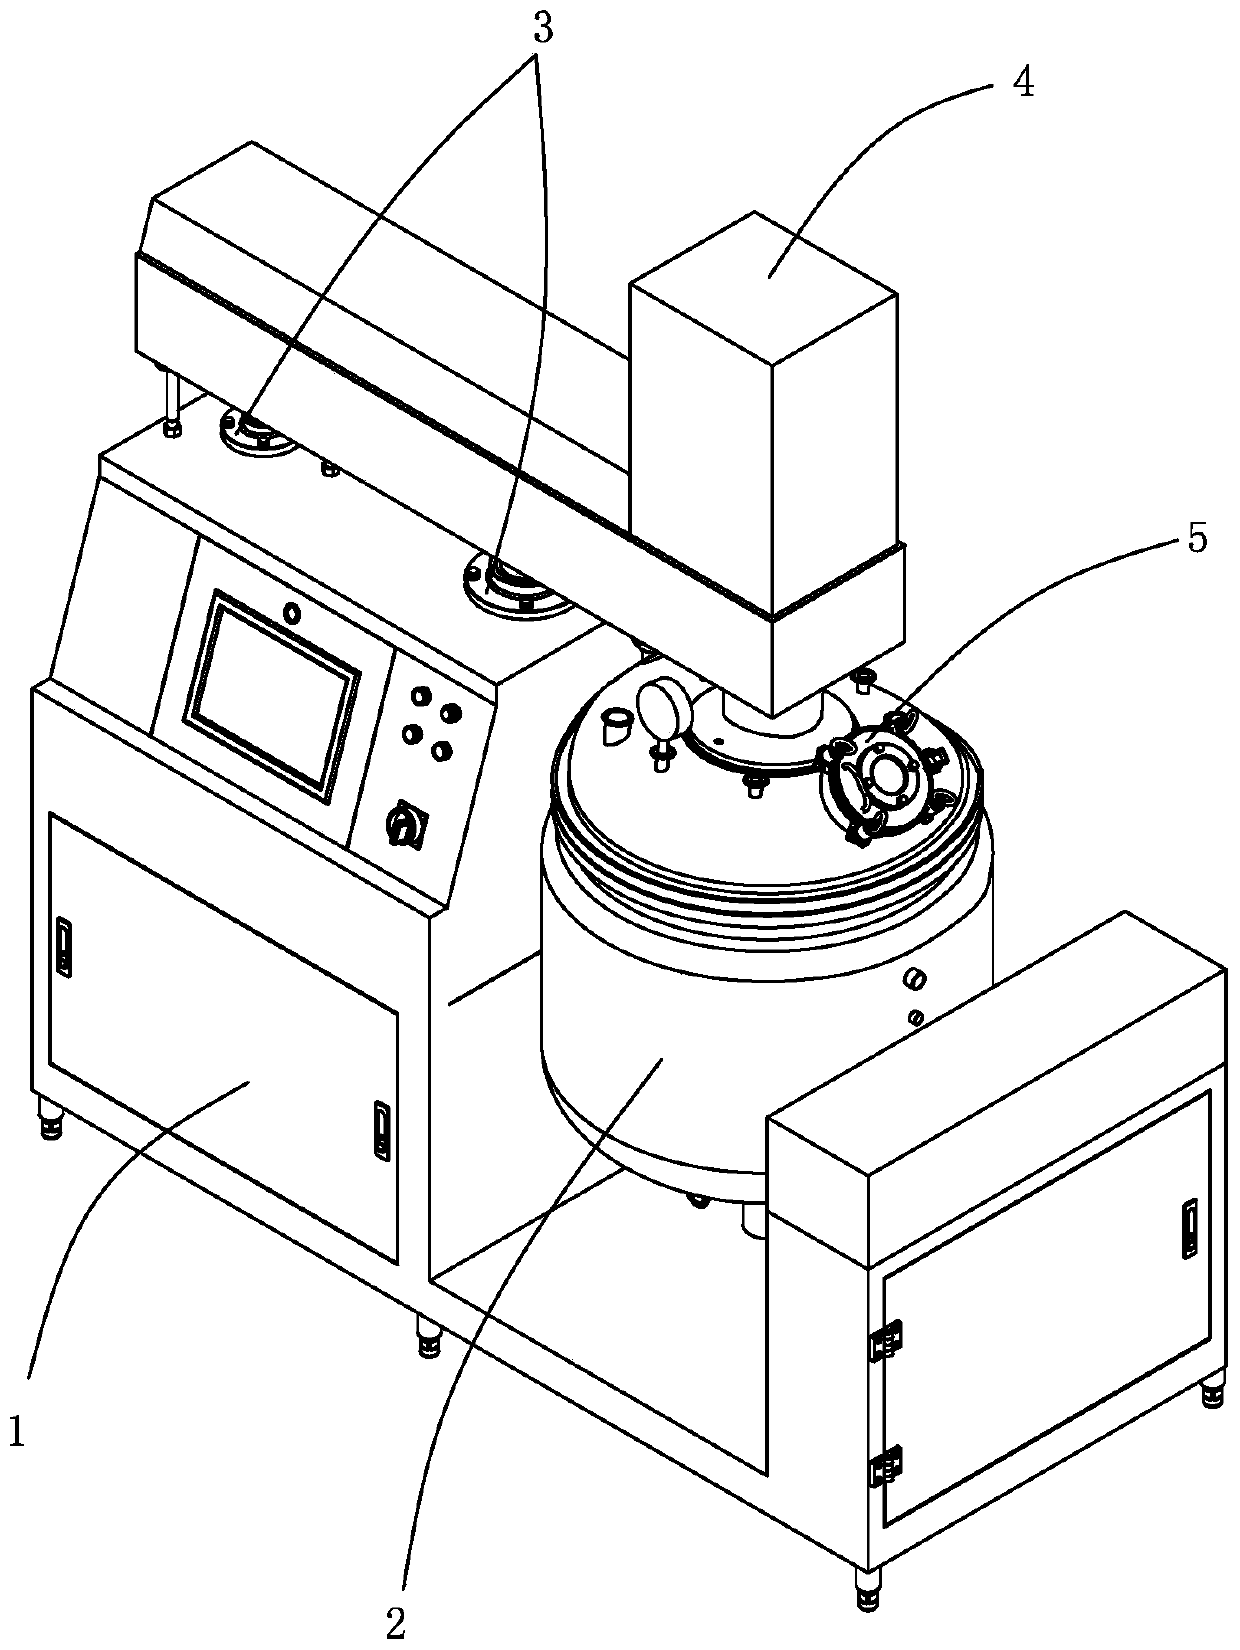 Emulsifying equipment with adjustable stirring blades